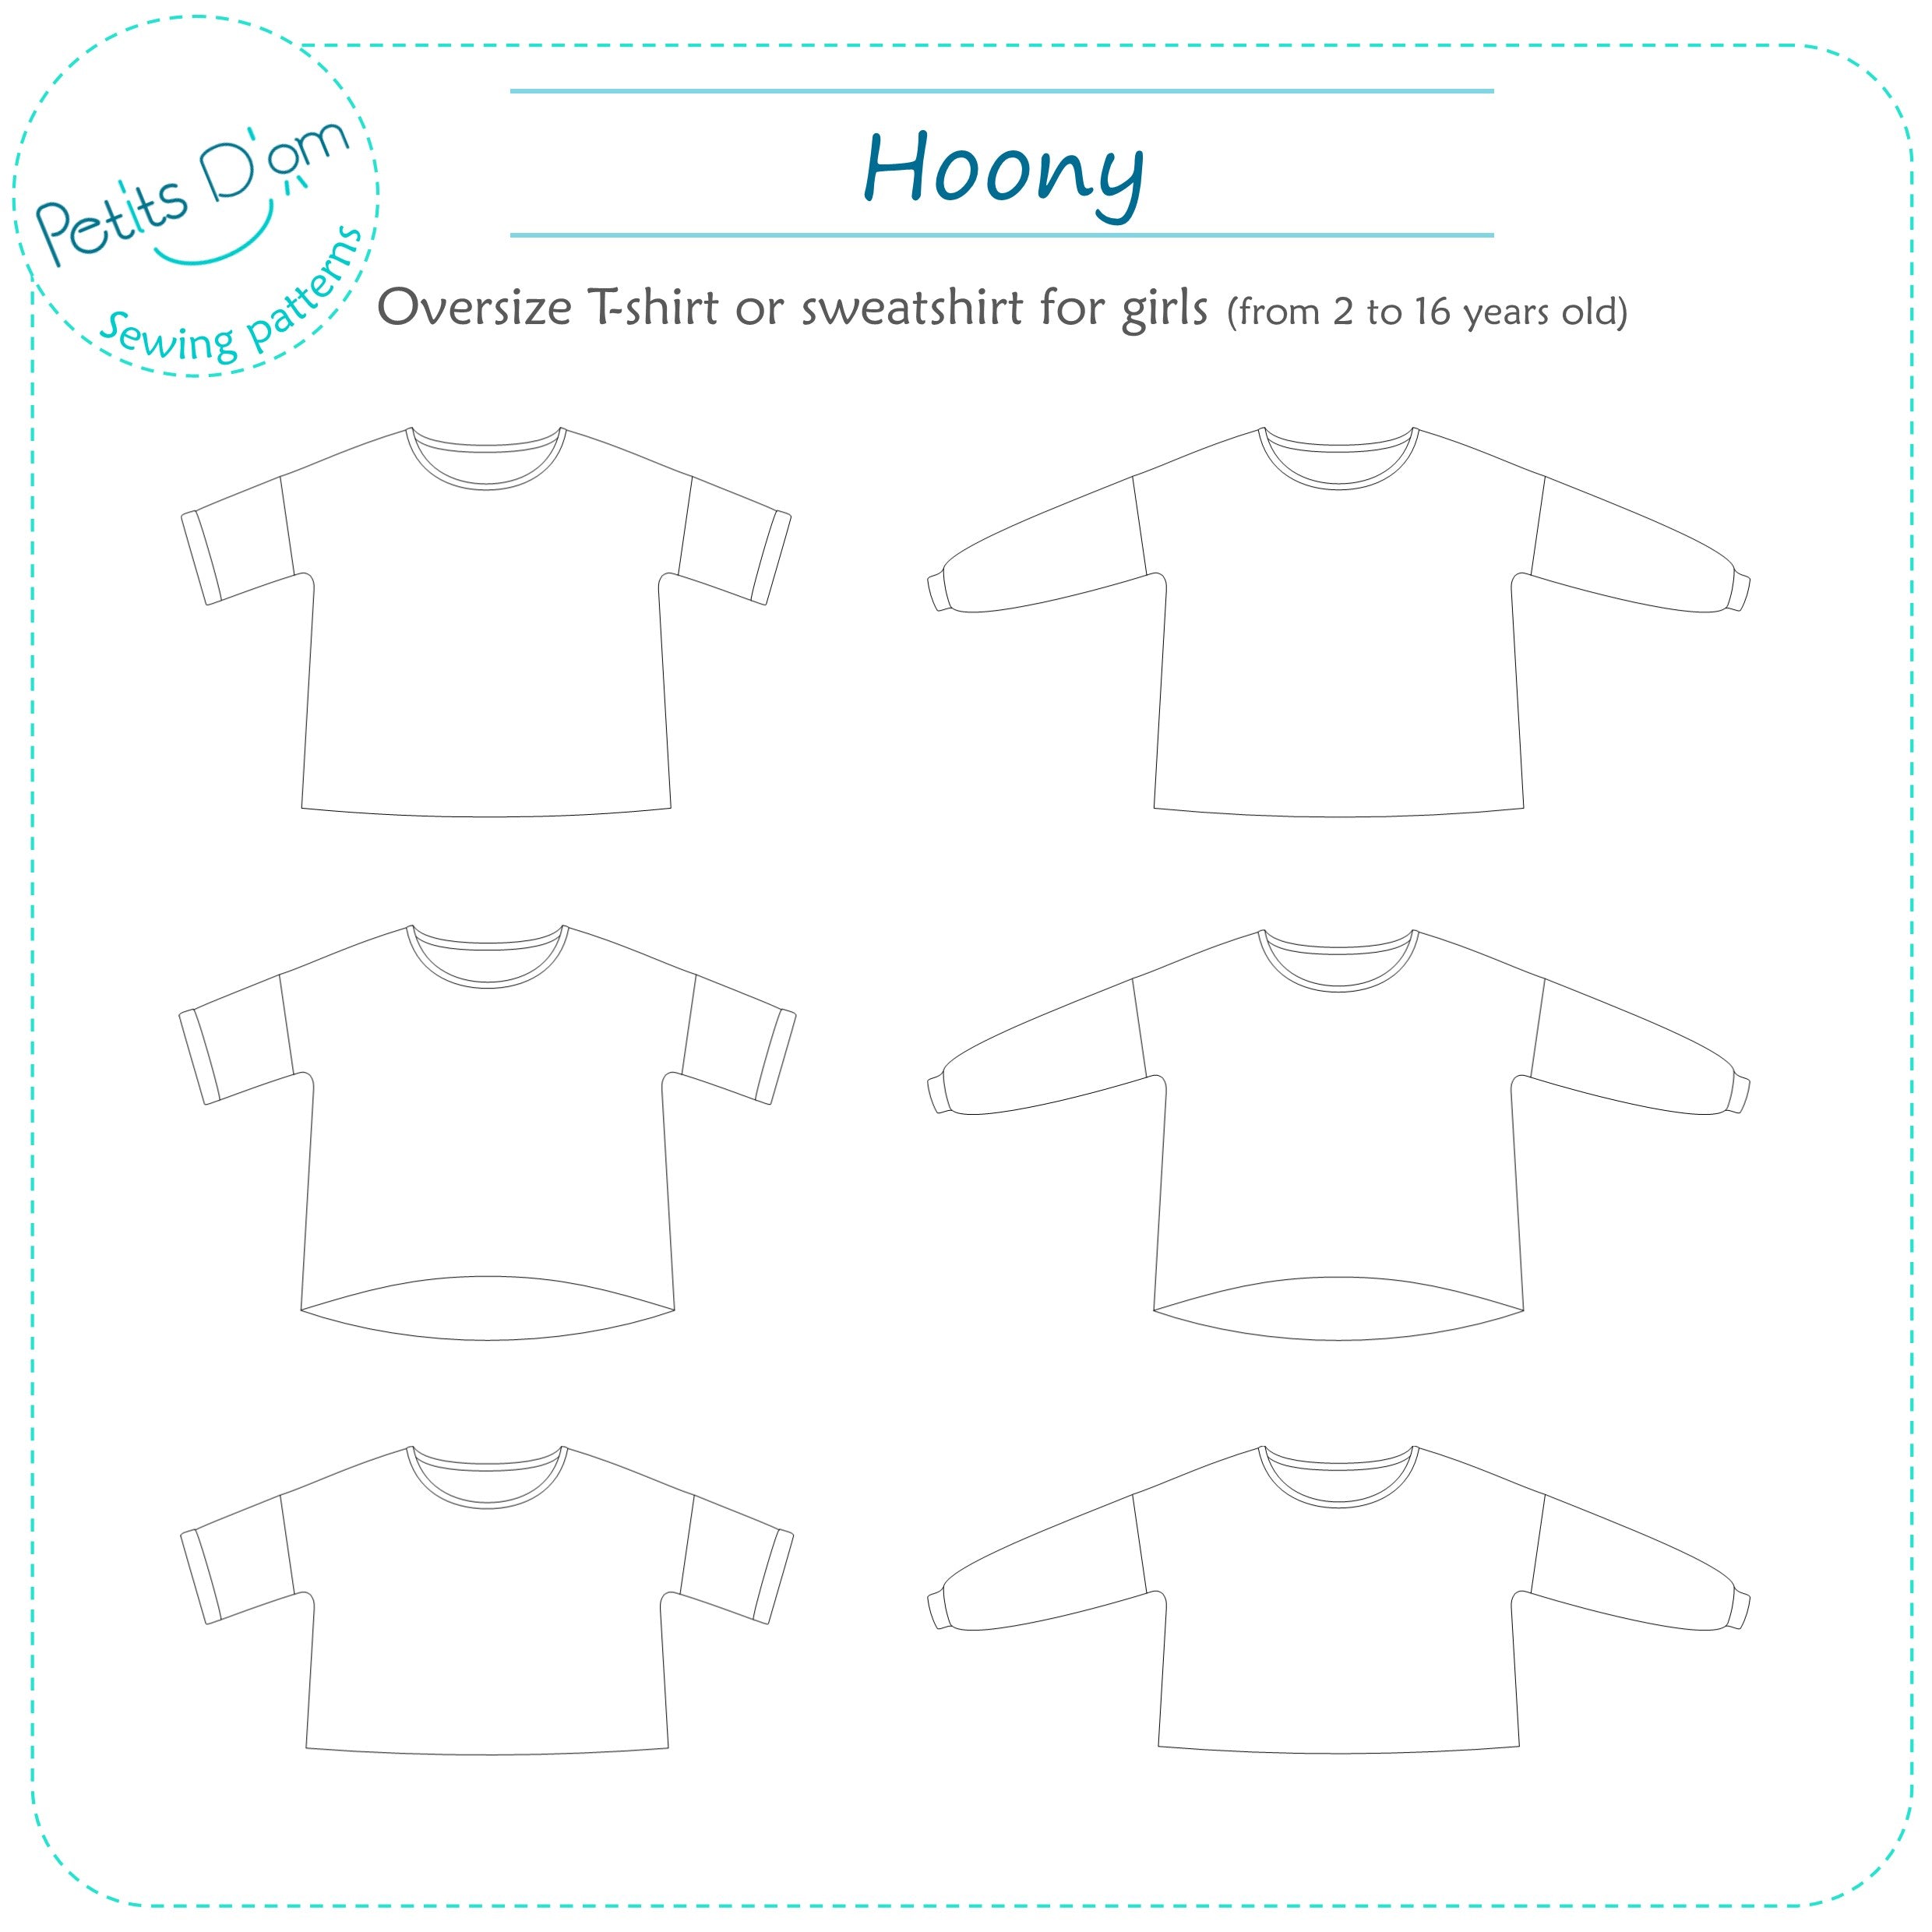 Petits D’om Child/Teen Hoony T-shirt or Sweatshirt